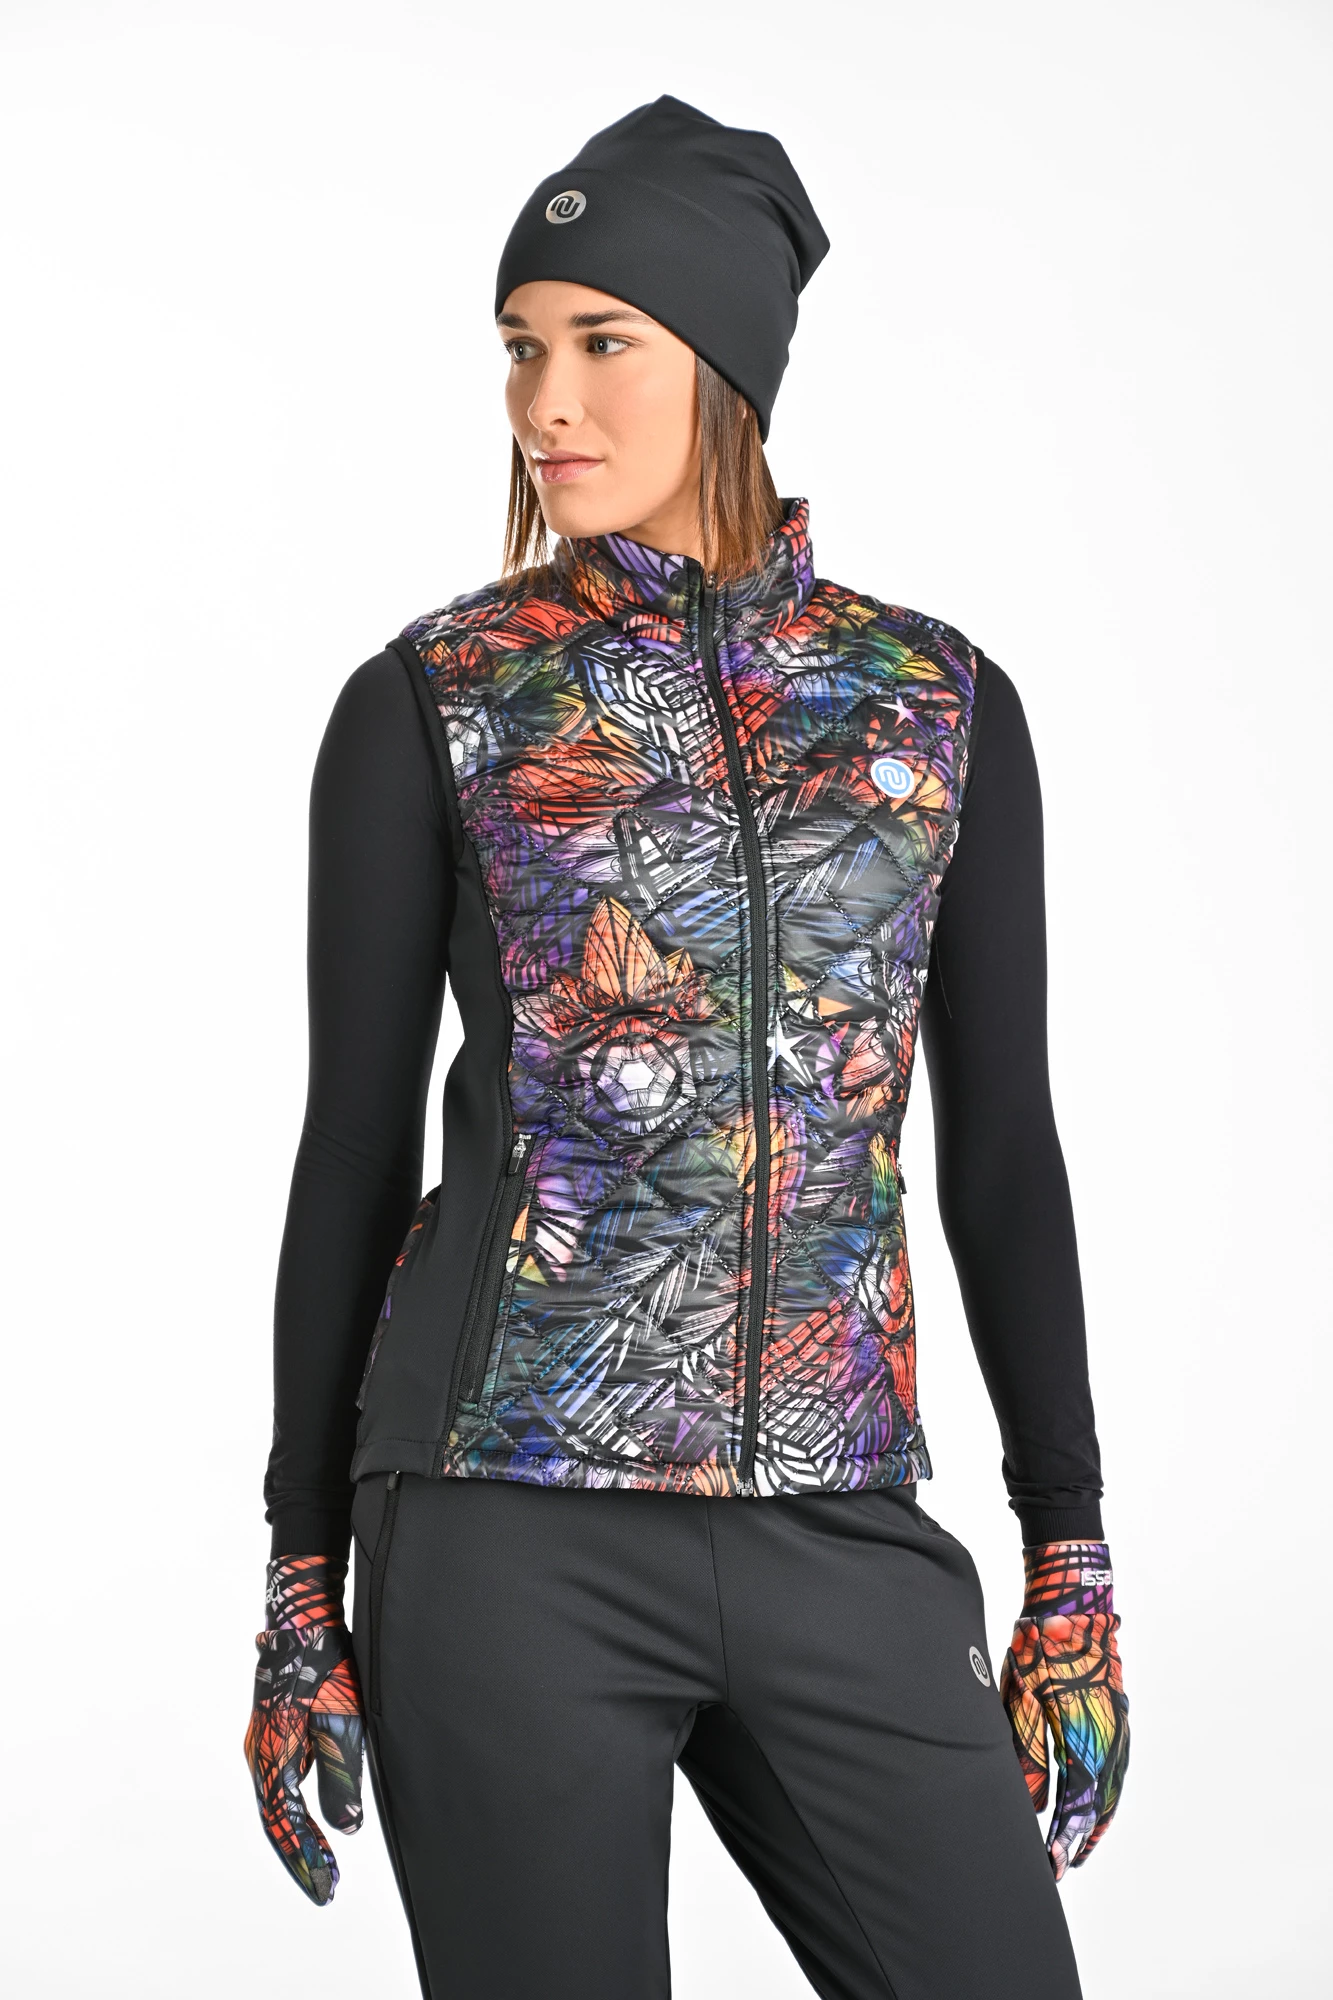 Women's running vests - Nessi Sportswear